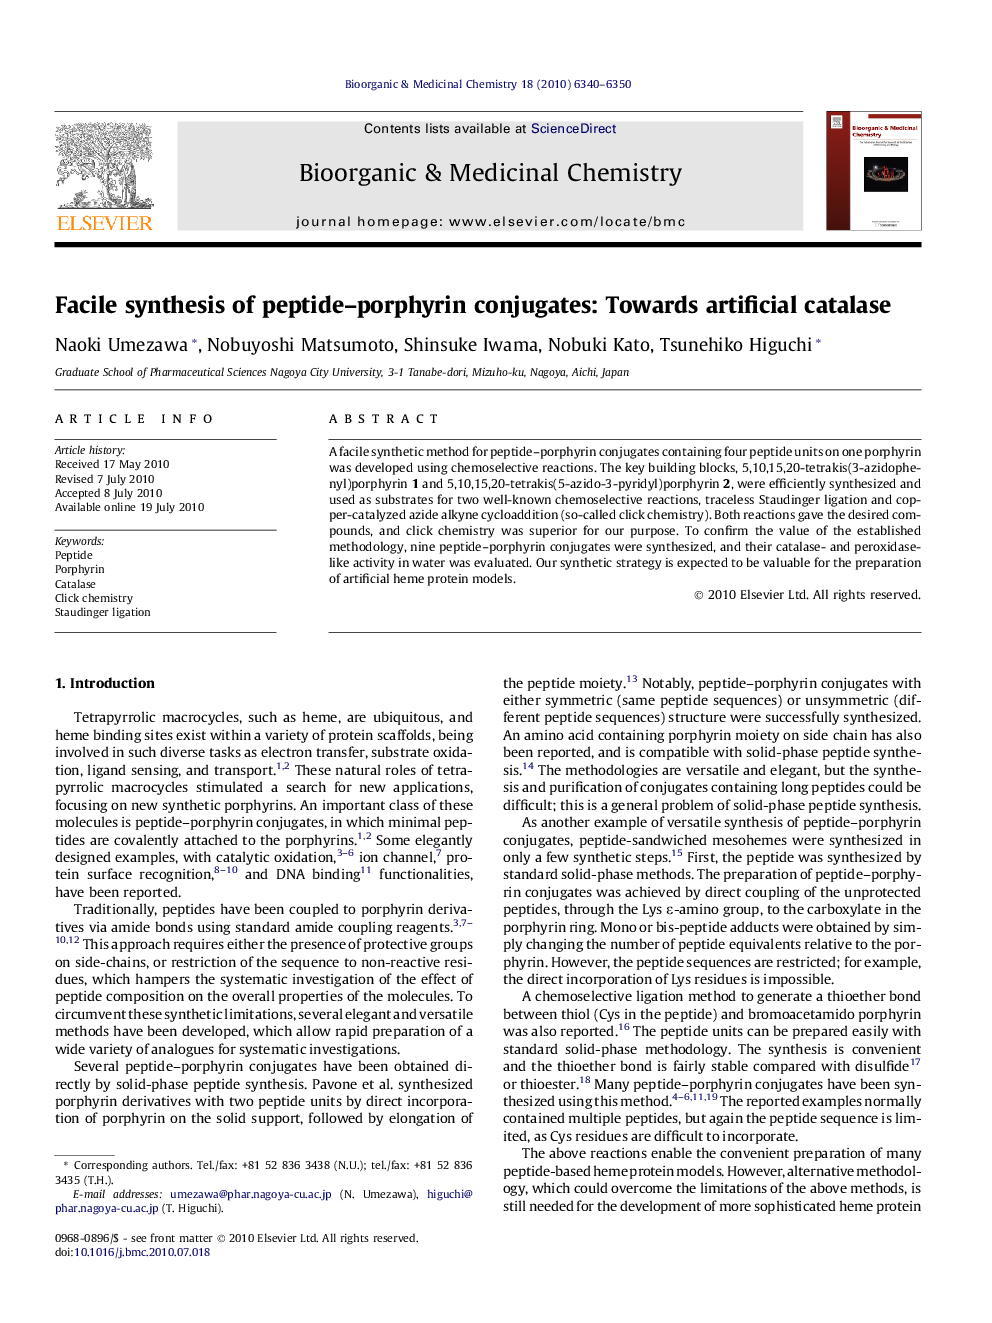 Facile synthesis of peptide–porphyrin conjugates: Towards artificial catalase